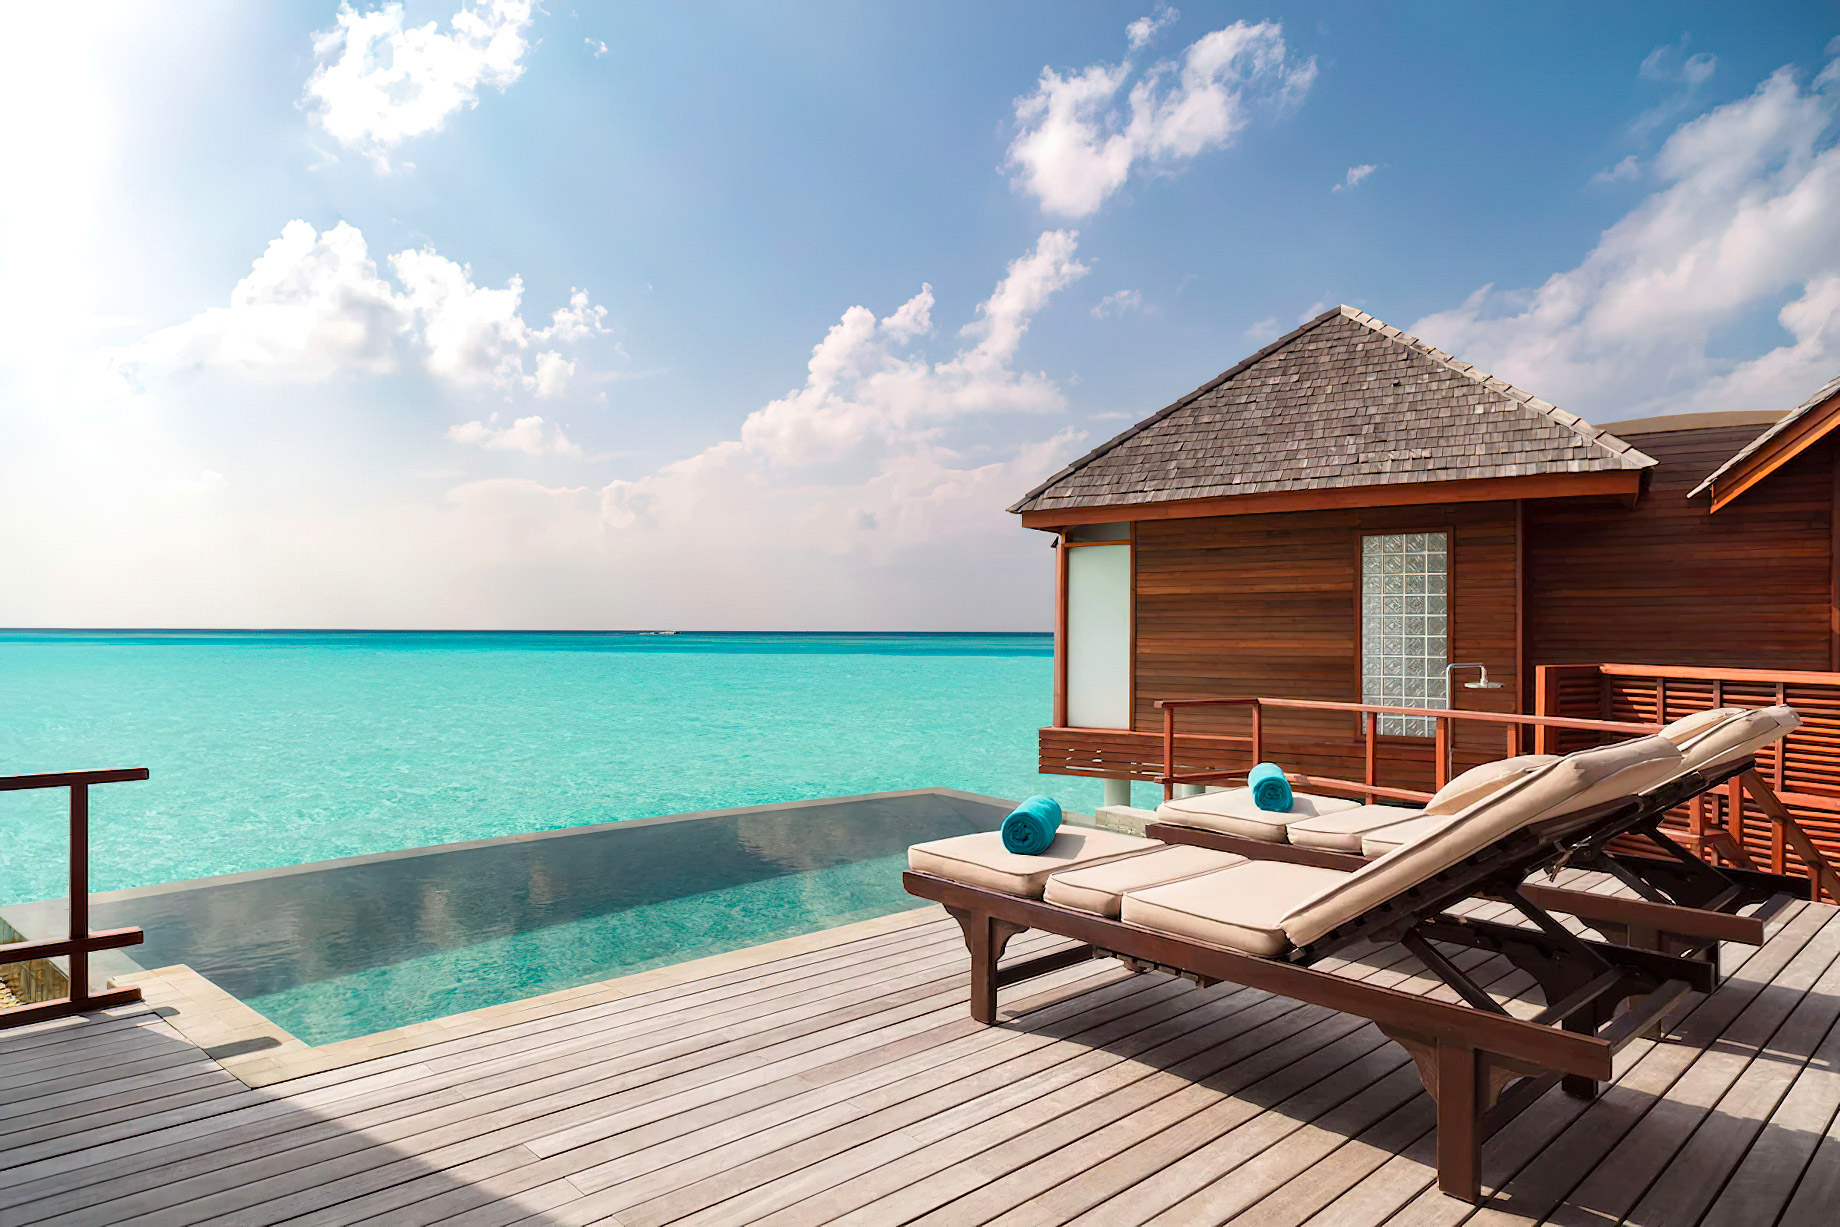 Anantara Thigu Maldives Resort - South Male Atoll, Maldives - Sunset Over Water Pool Suite Deck